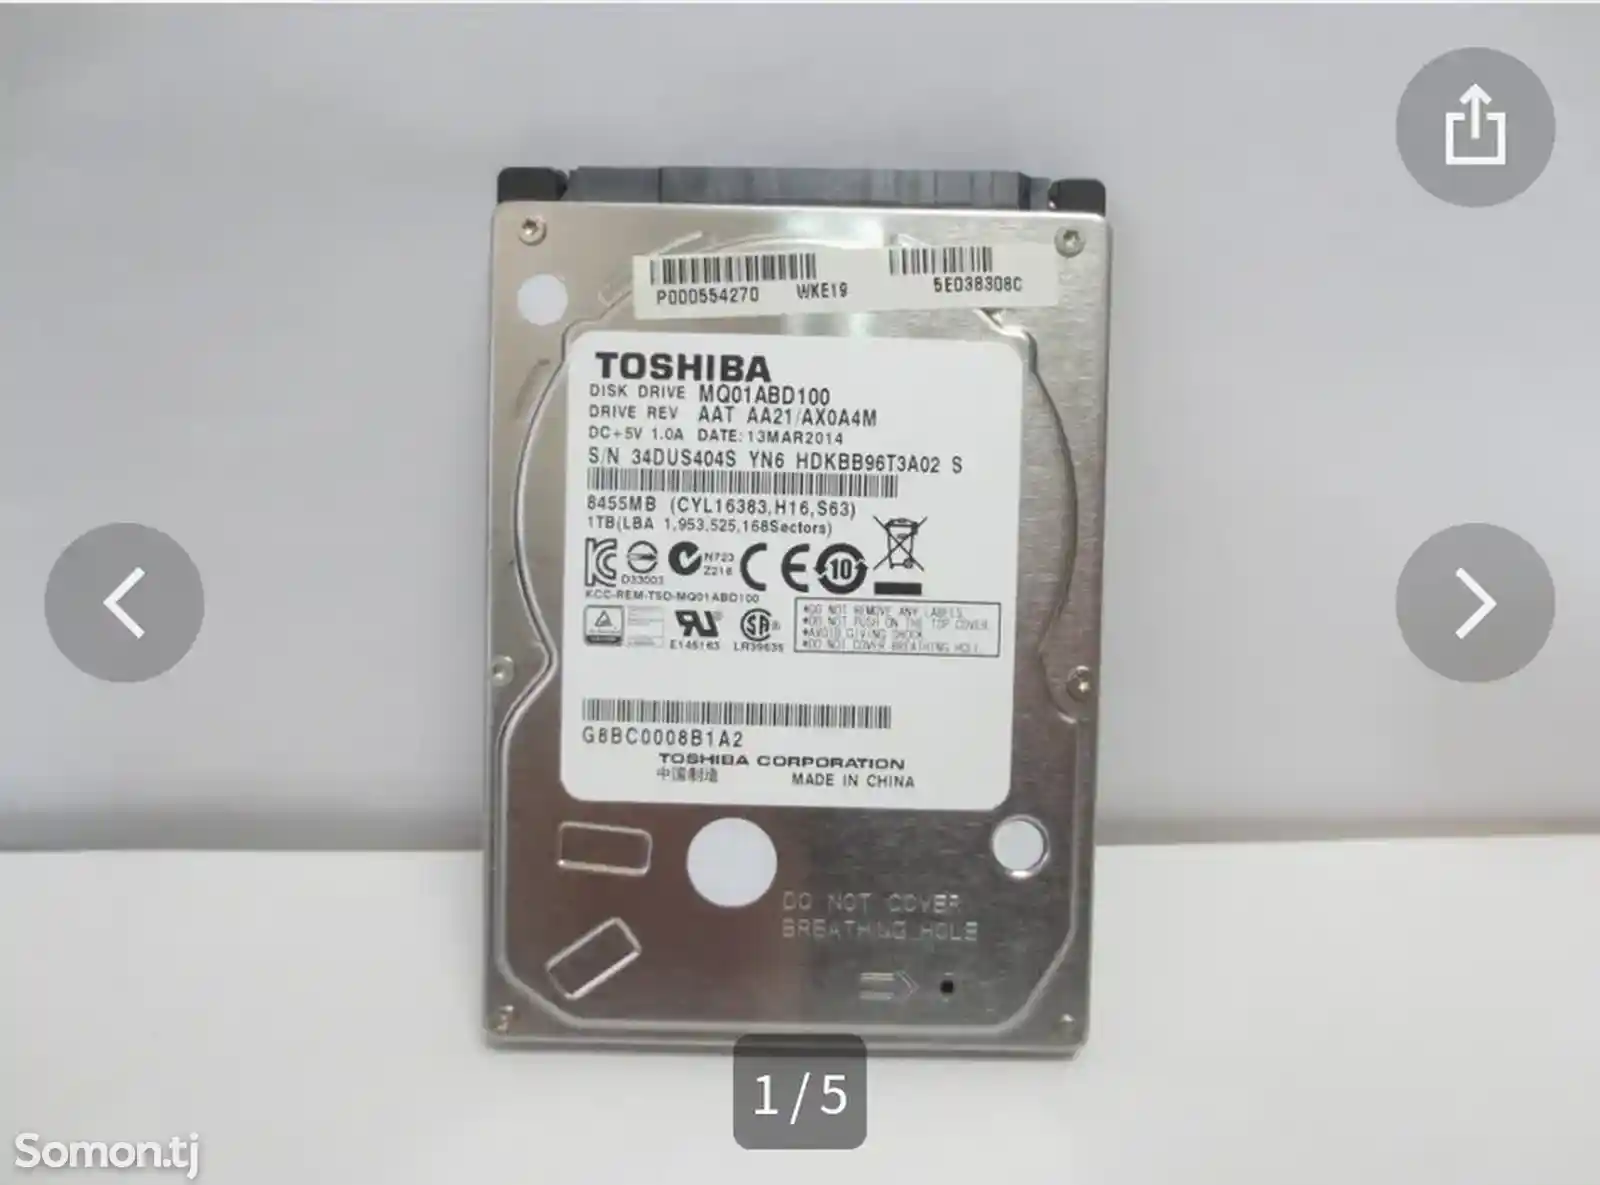 Жесткий диск Toshiba 1 TB